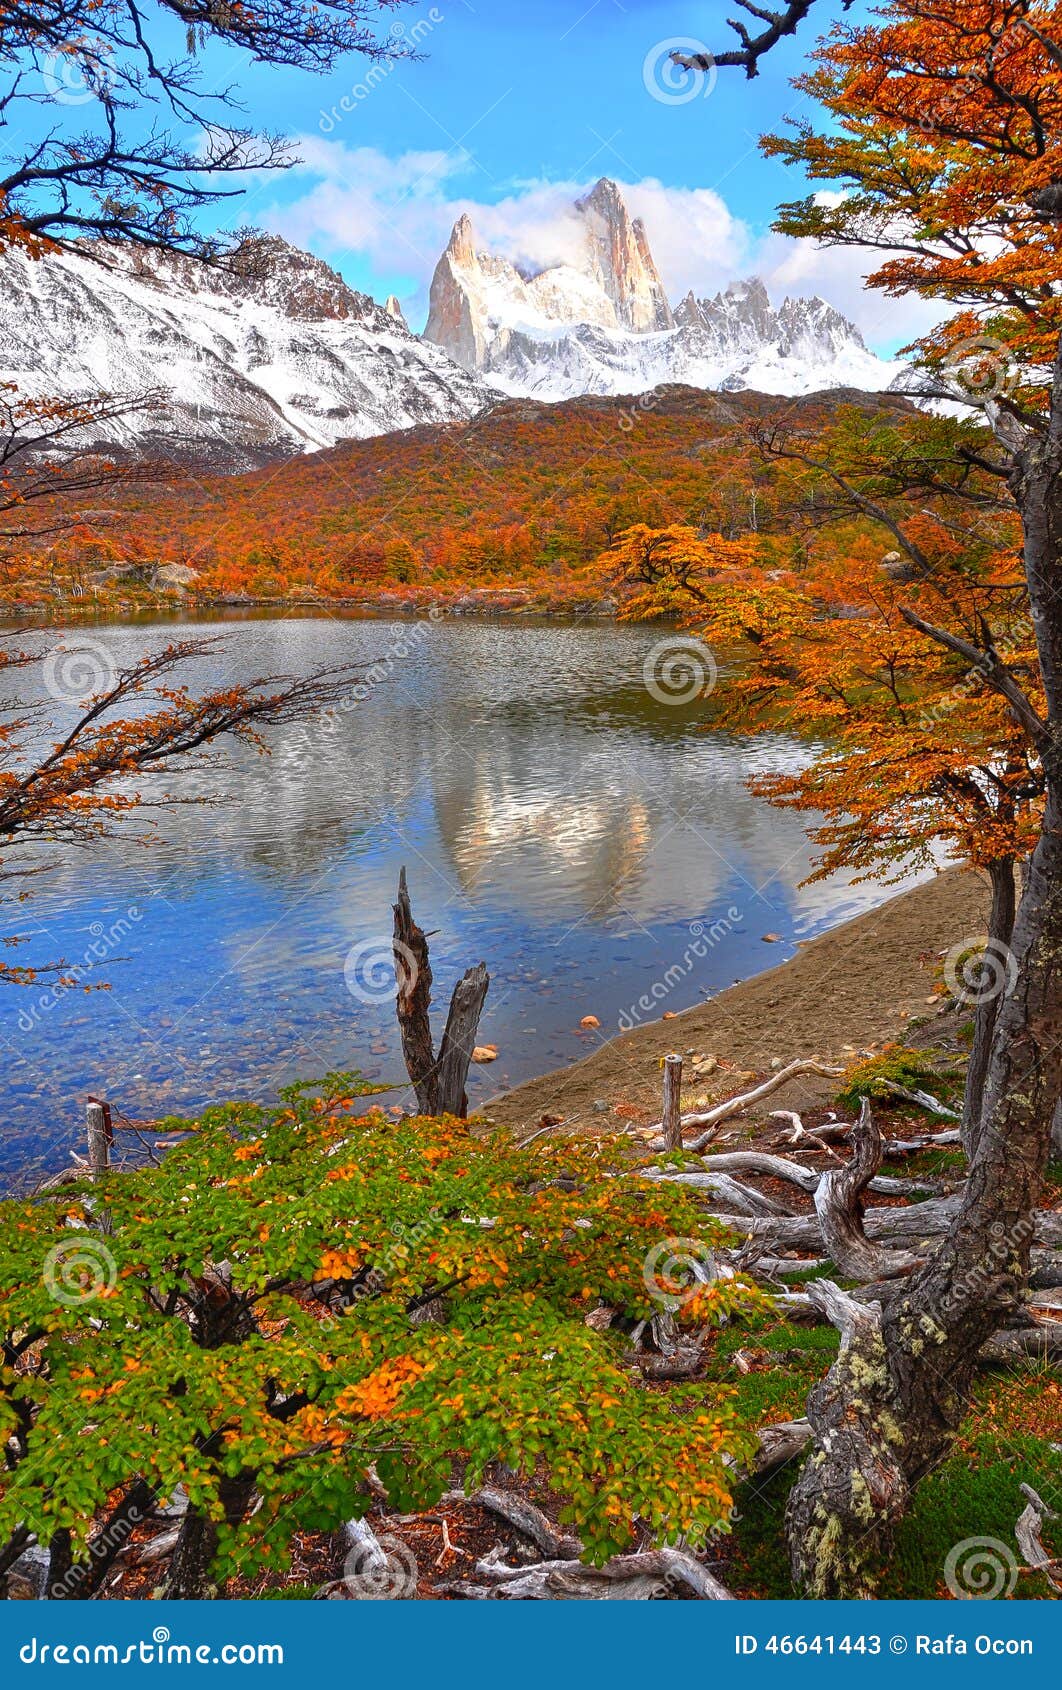 fitz roy mountain in el chalten, argentina patagonia